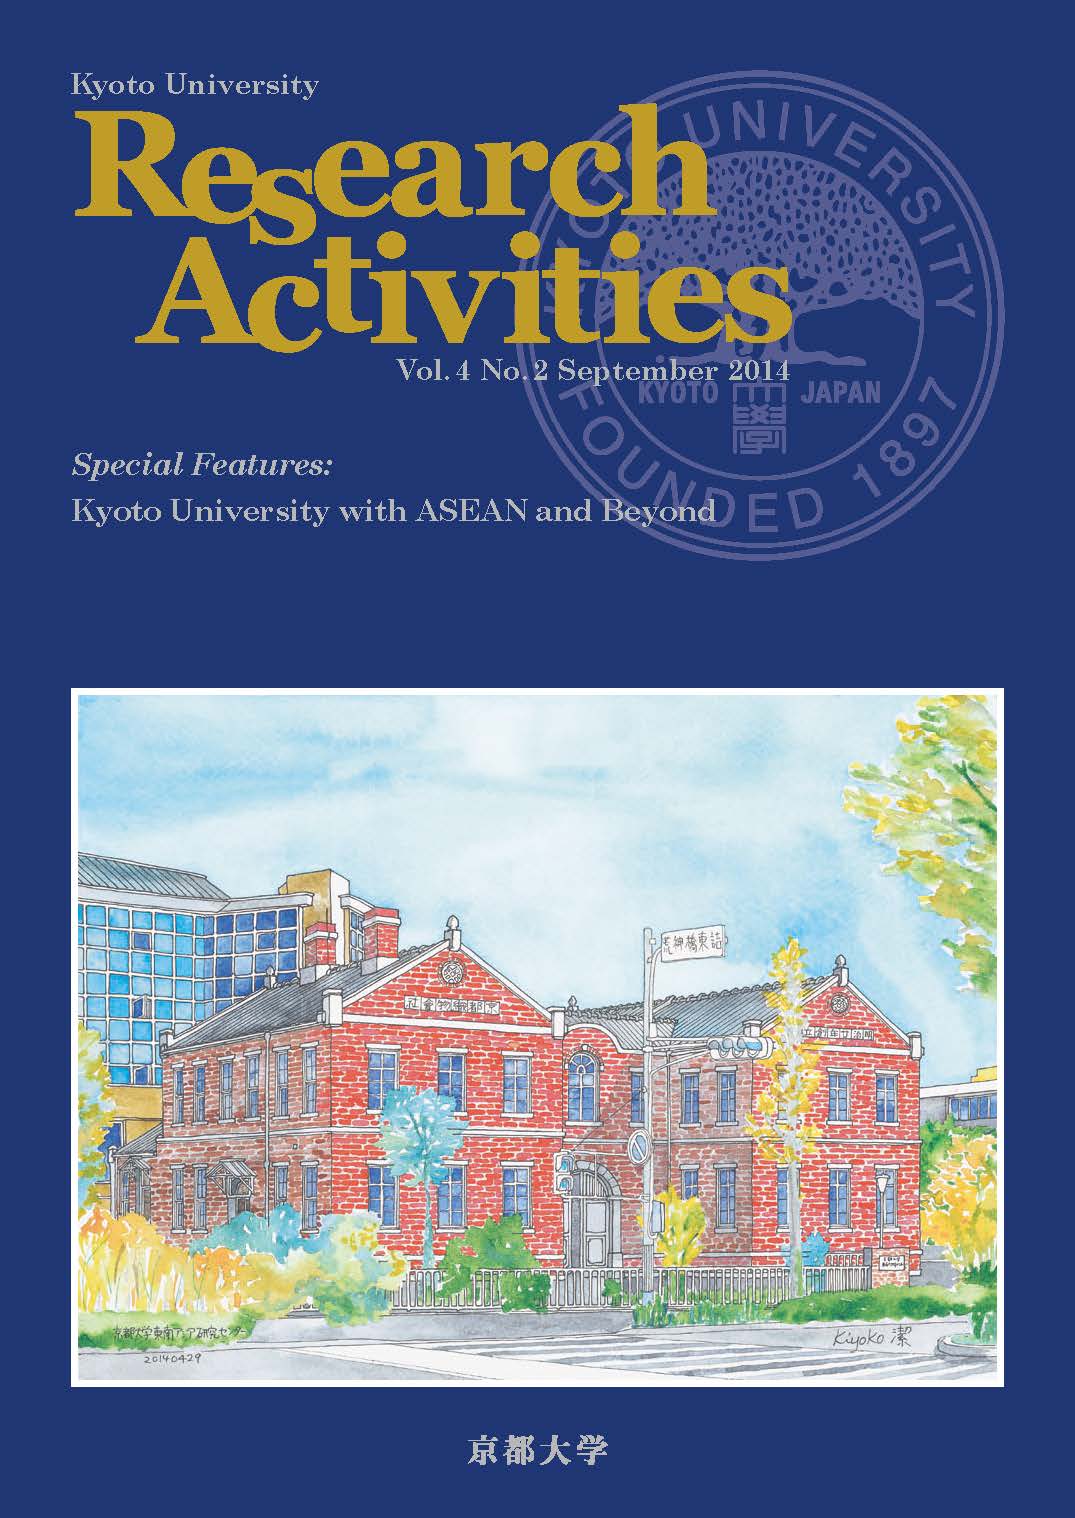 Kyoto University Research Activities Vol.4 No.2 September 2014